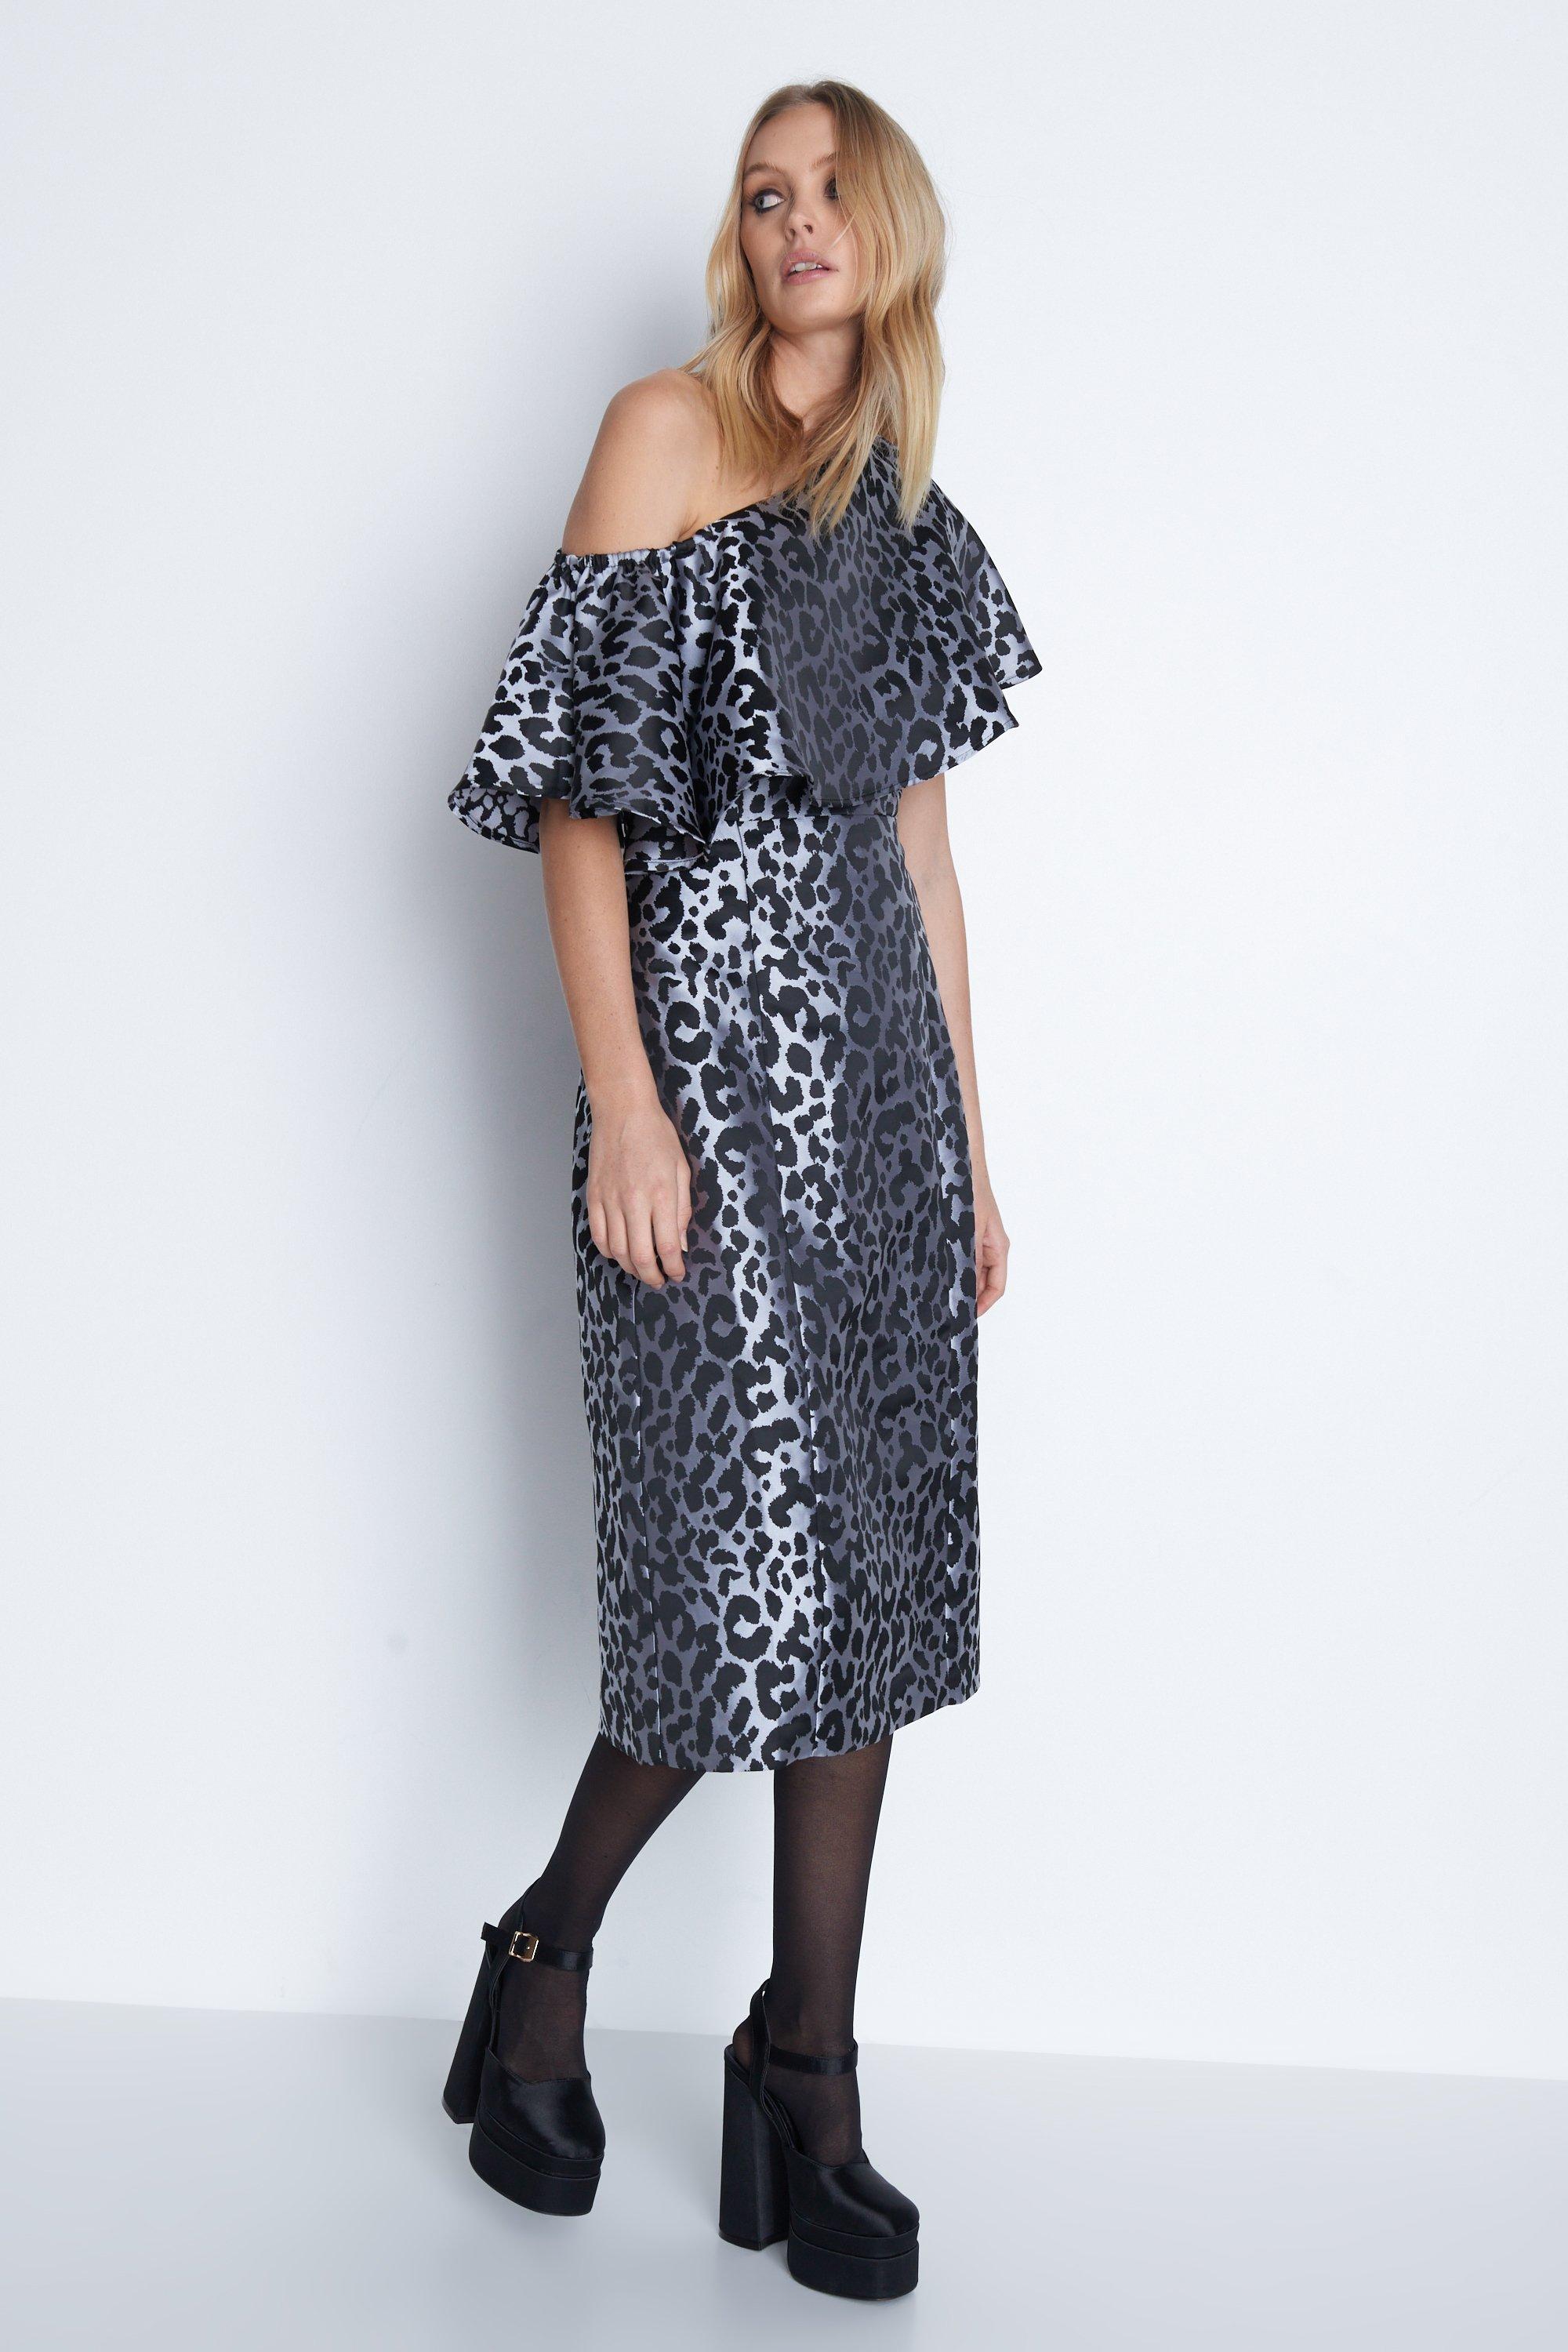 Dresses | Leopard Print One Shoulder Midi Dress | Warehouse